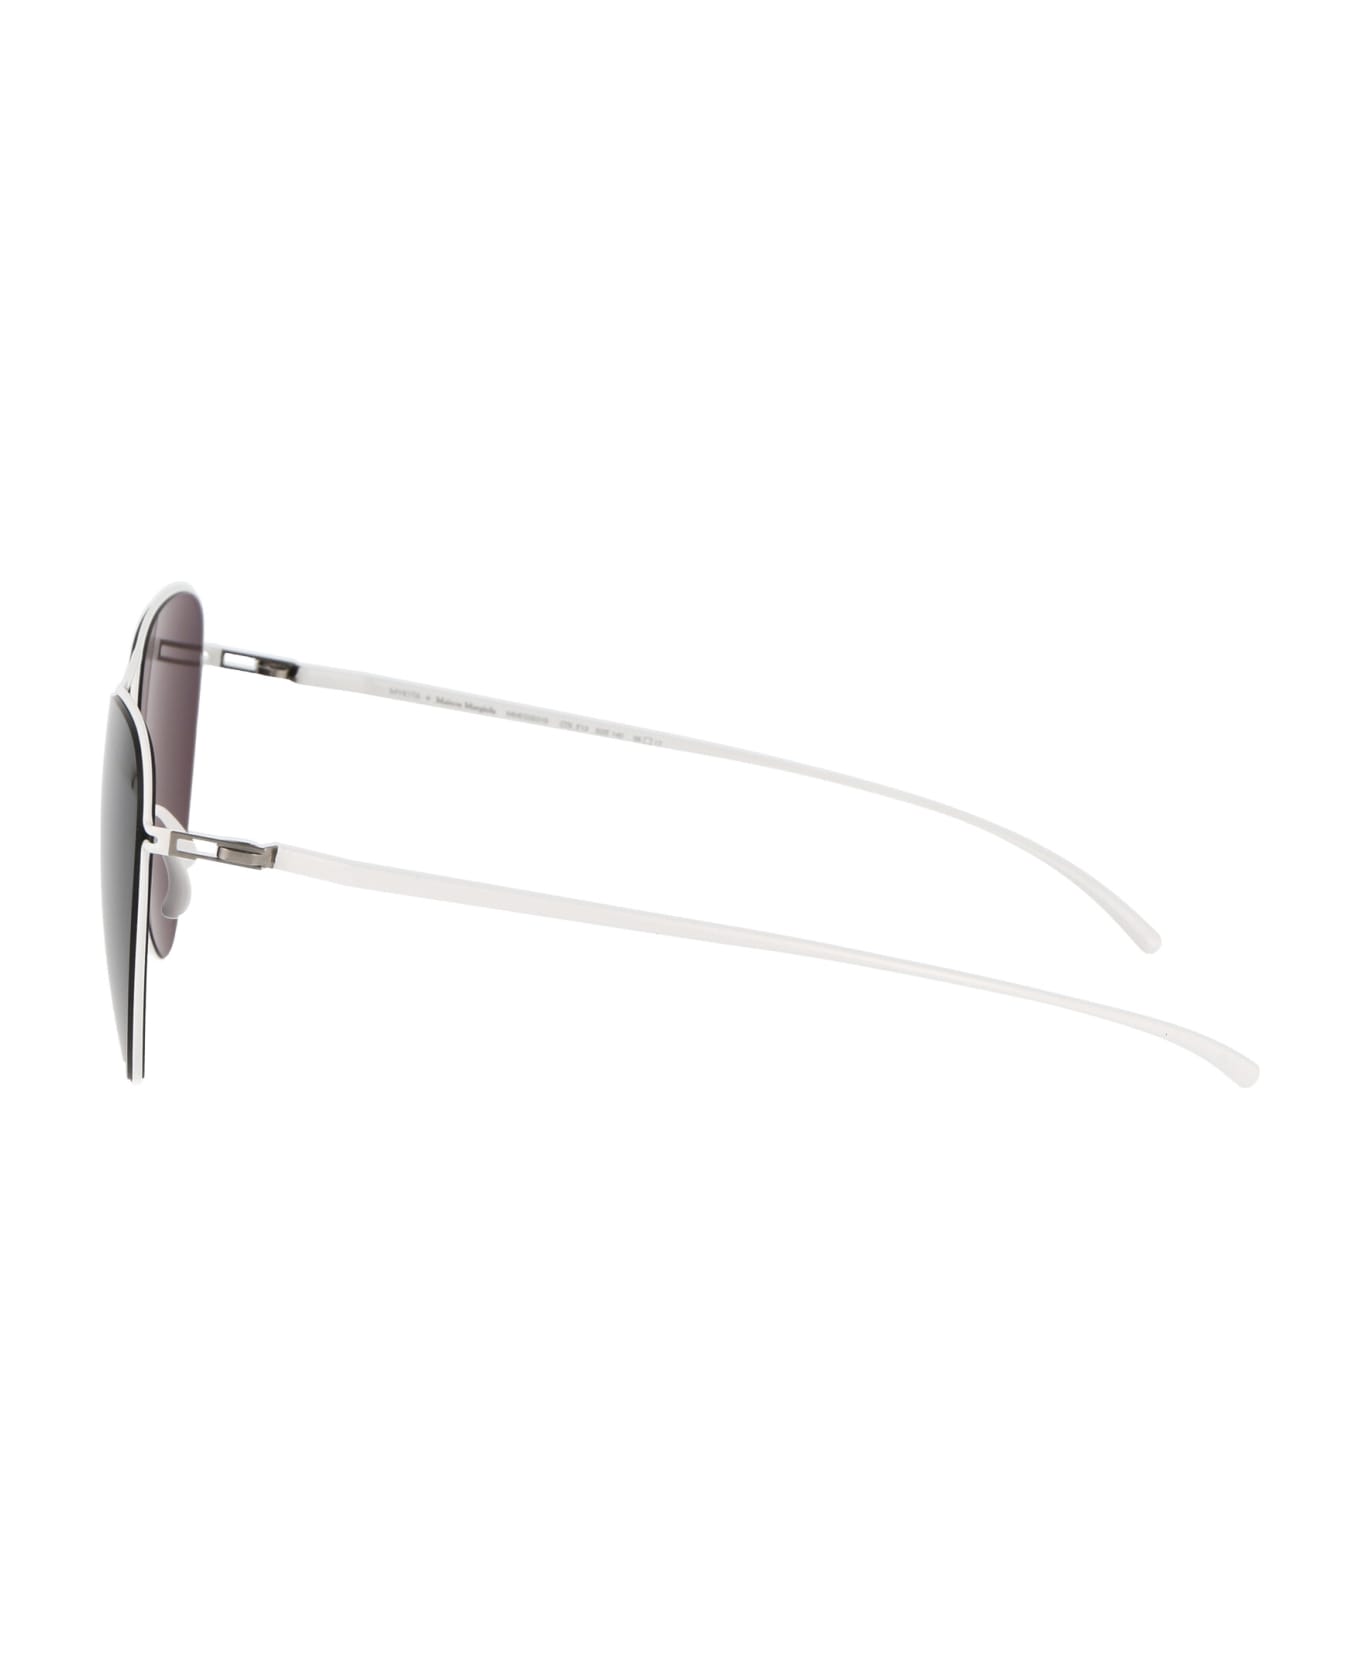 Mykita Mmesse015 Sunglasses - 333 E13 White Dark Grey Solid